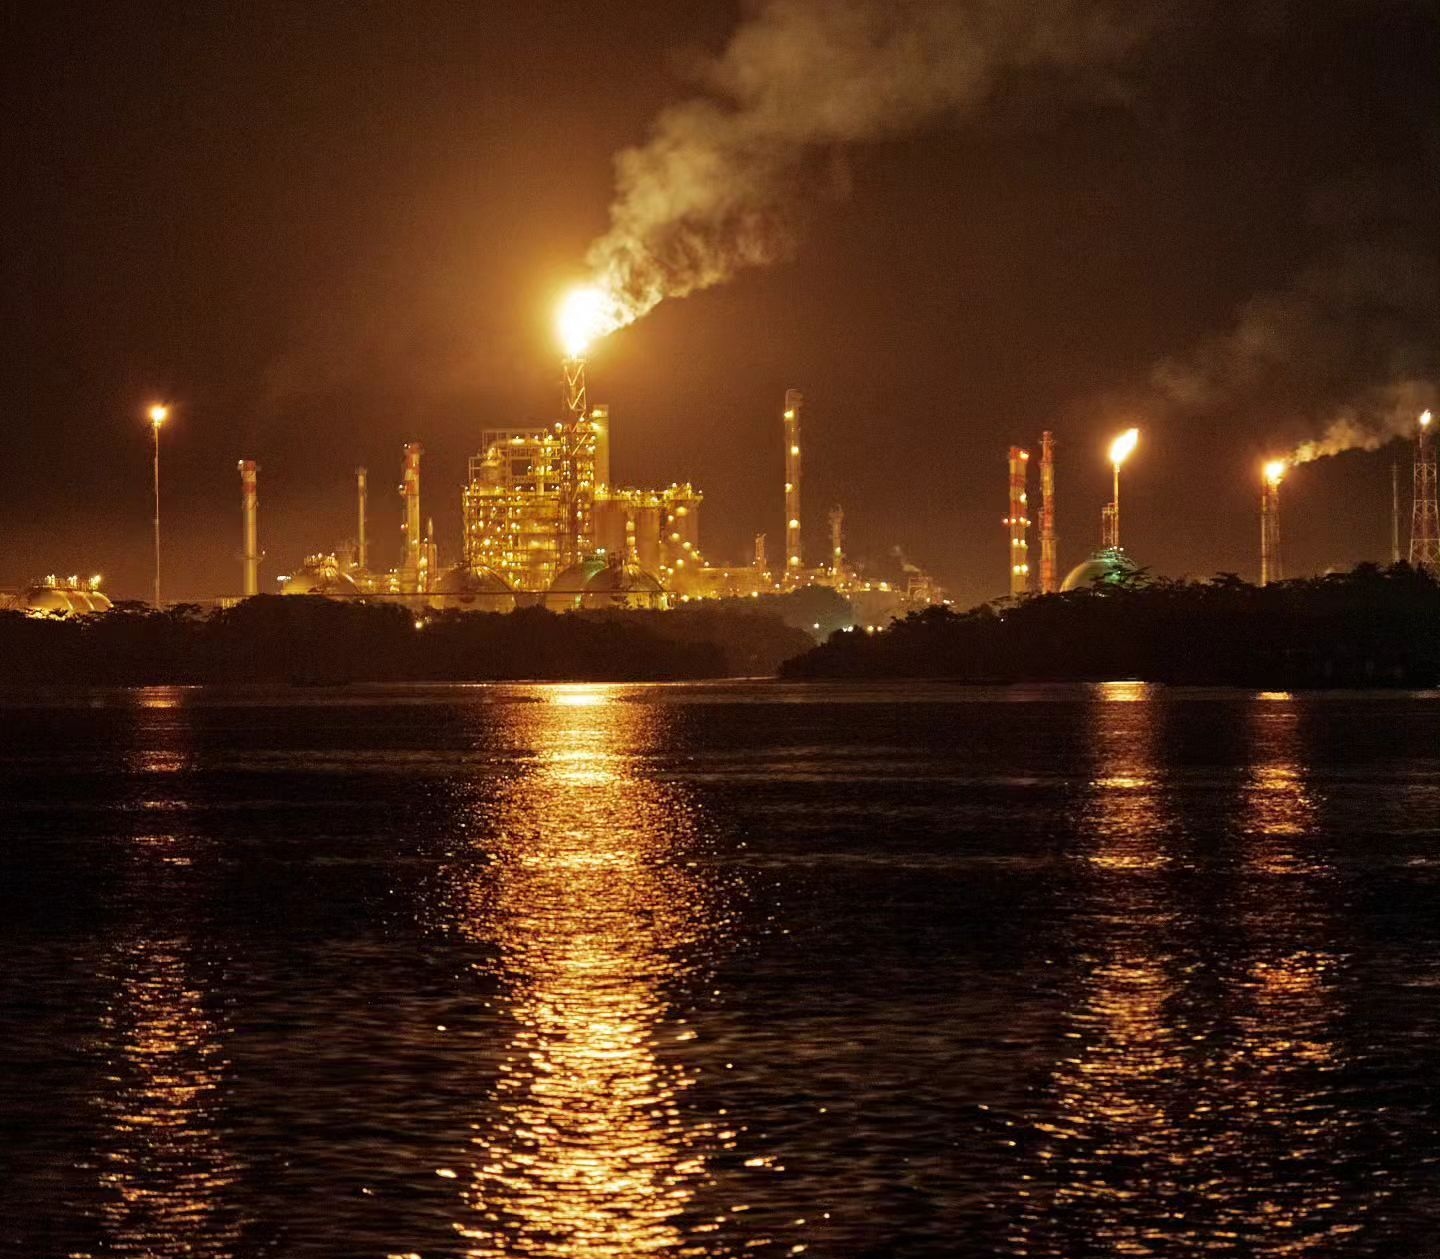 Kawasan industri Pertamina Cilacap di malam hari by Joyohatiman